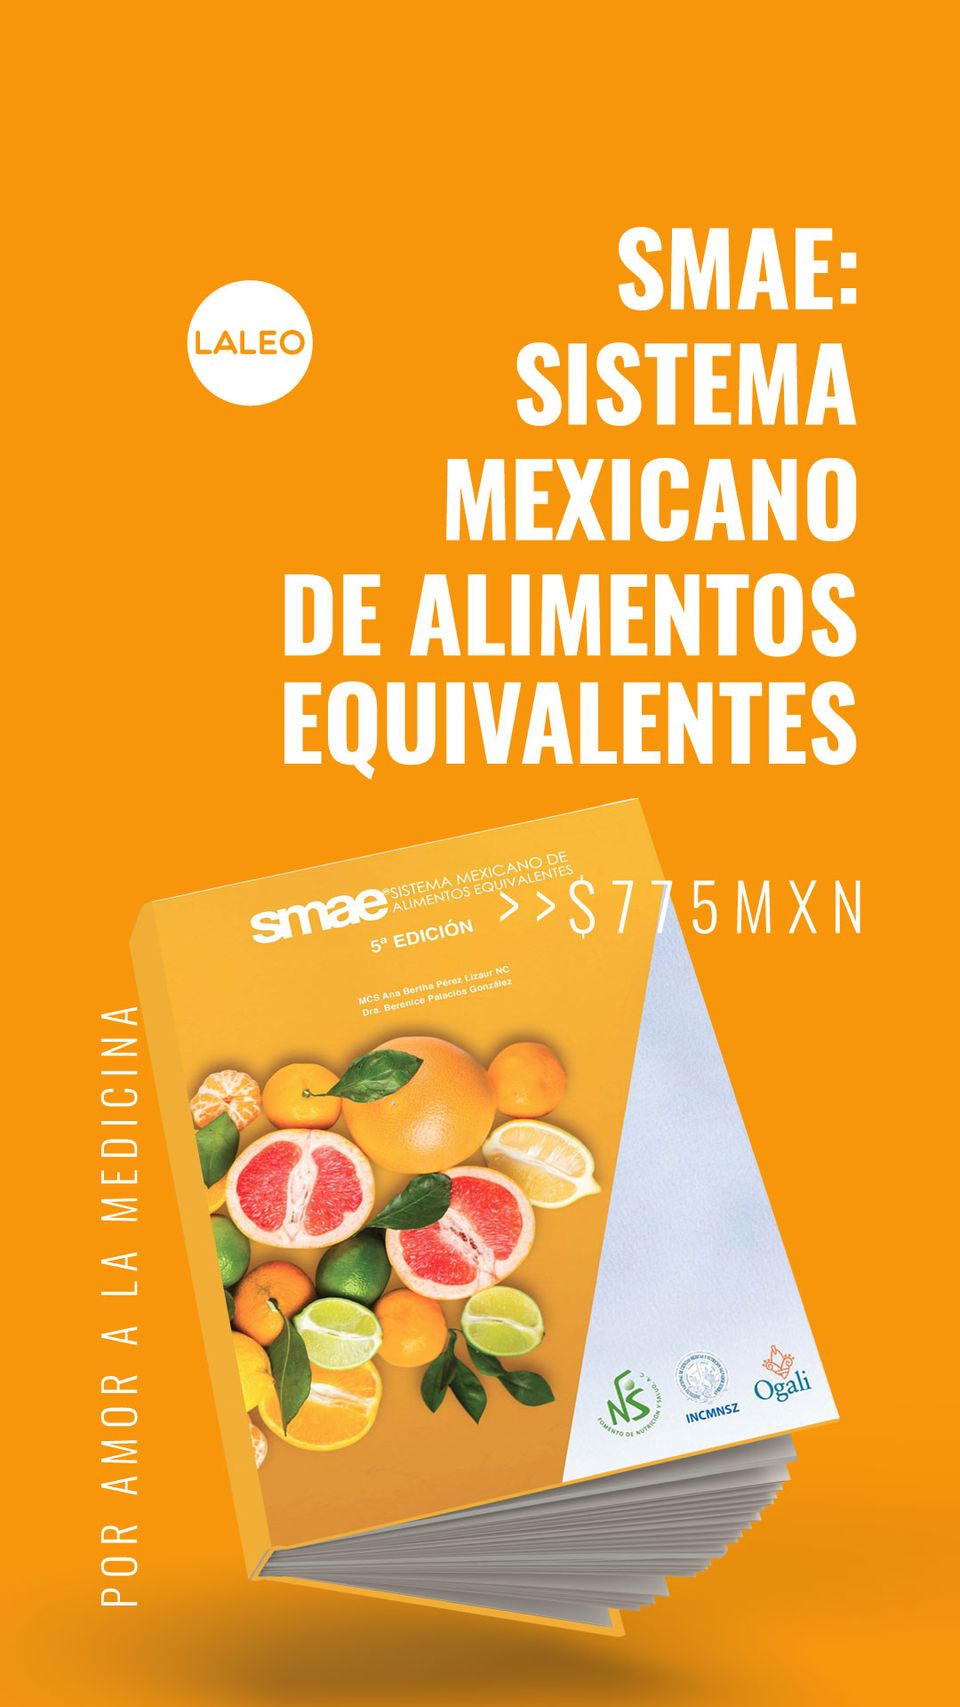 SMAE: Sistema mexicano de alimentos equivalentes